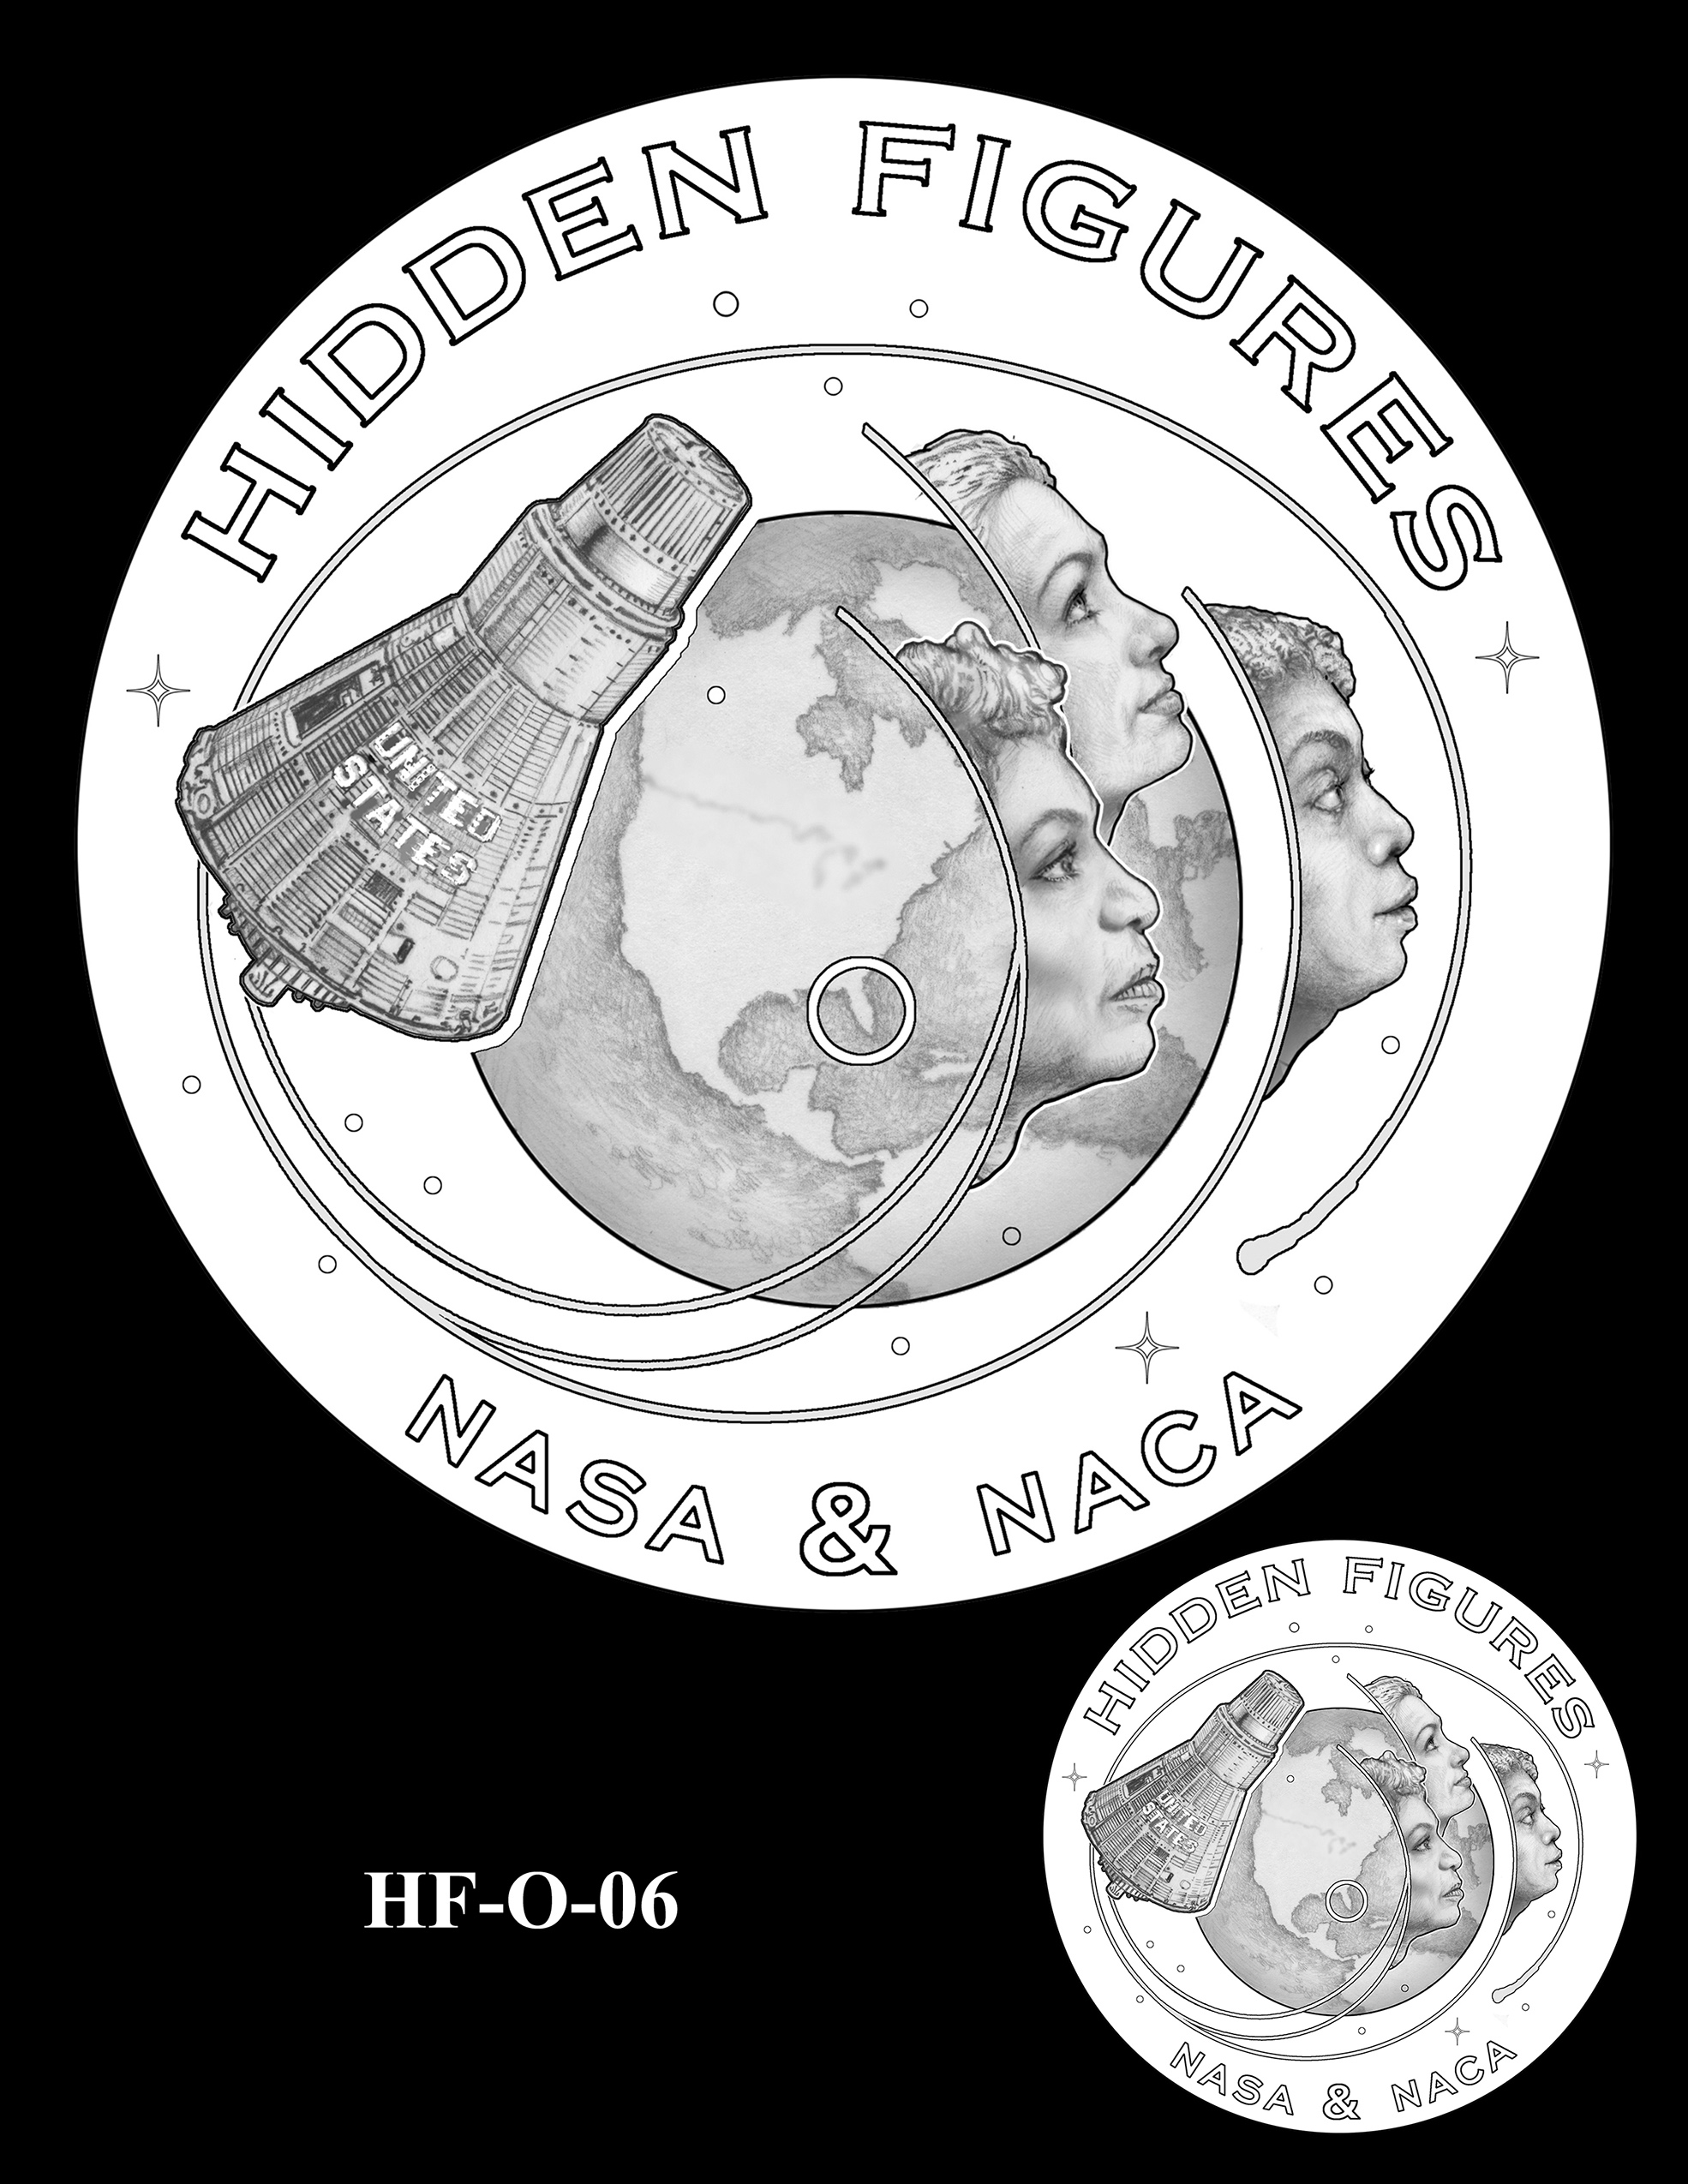 HF-O-06 -- Hidden Figures Group Congressional Gold Medal